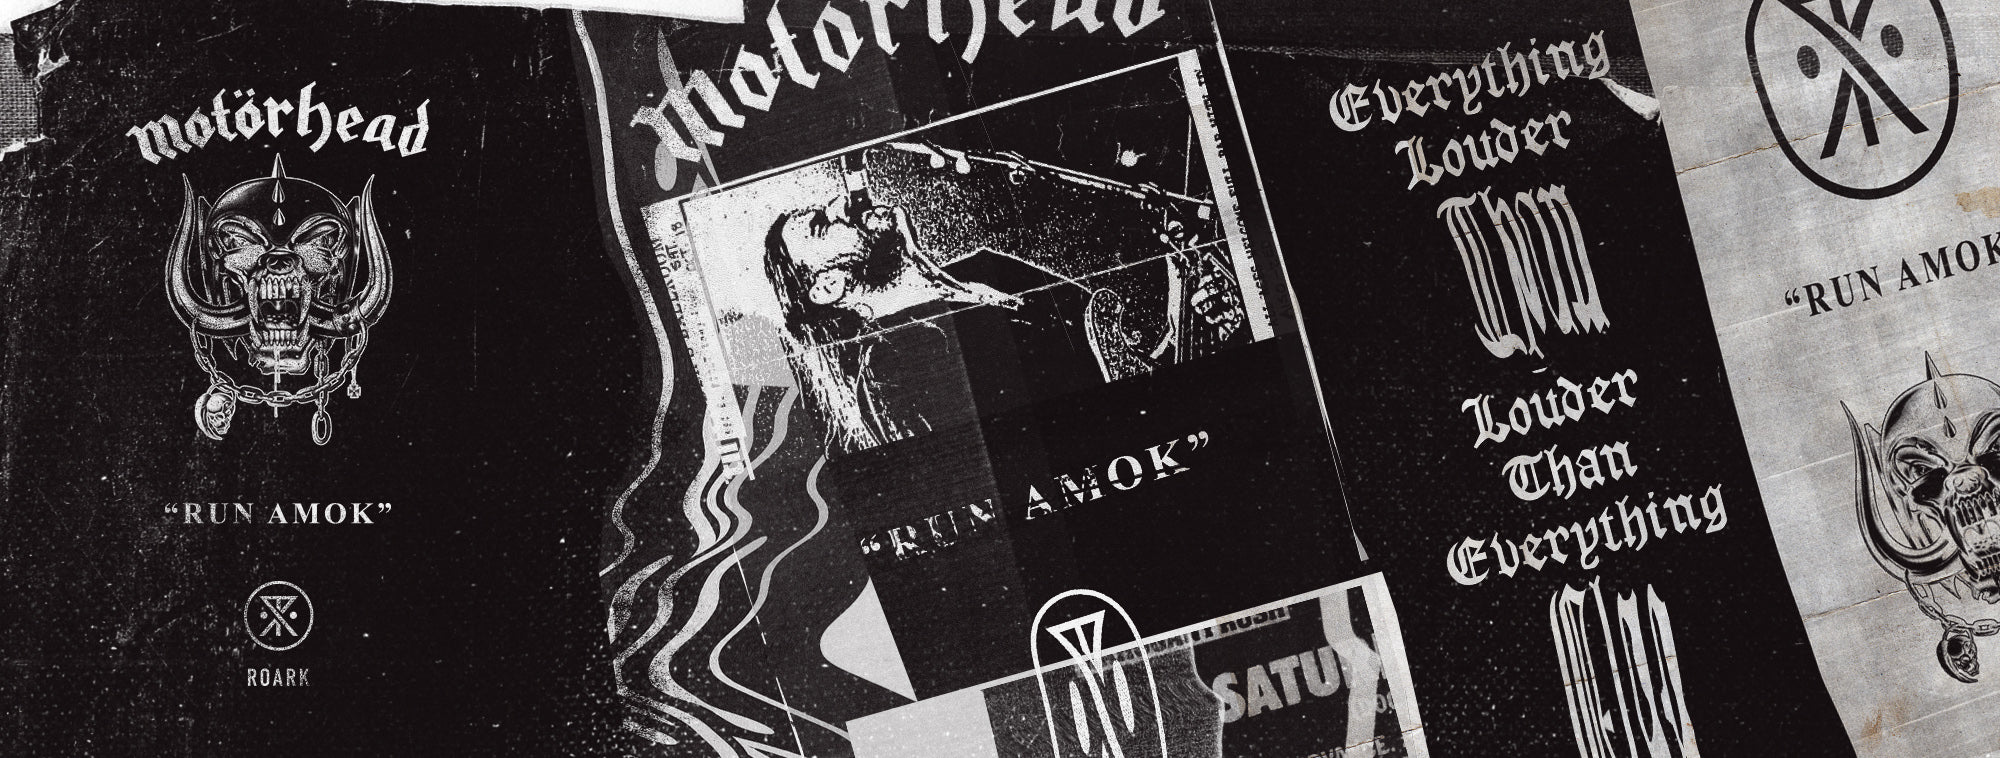 Motörhead x Run Amok